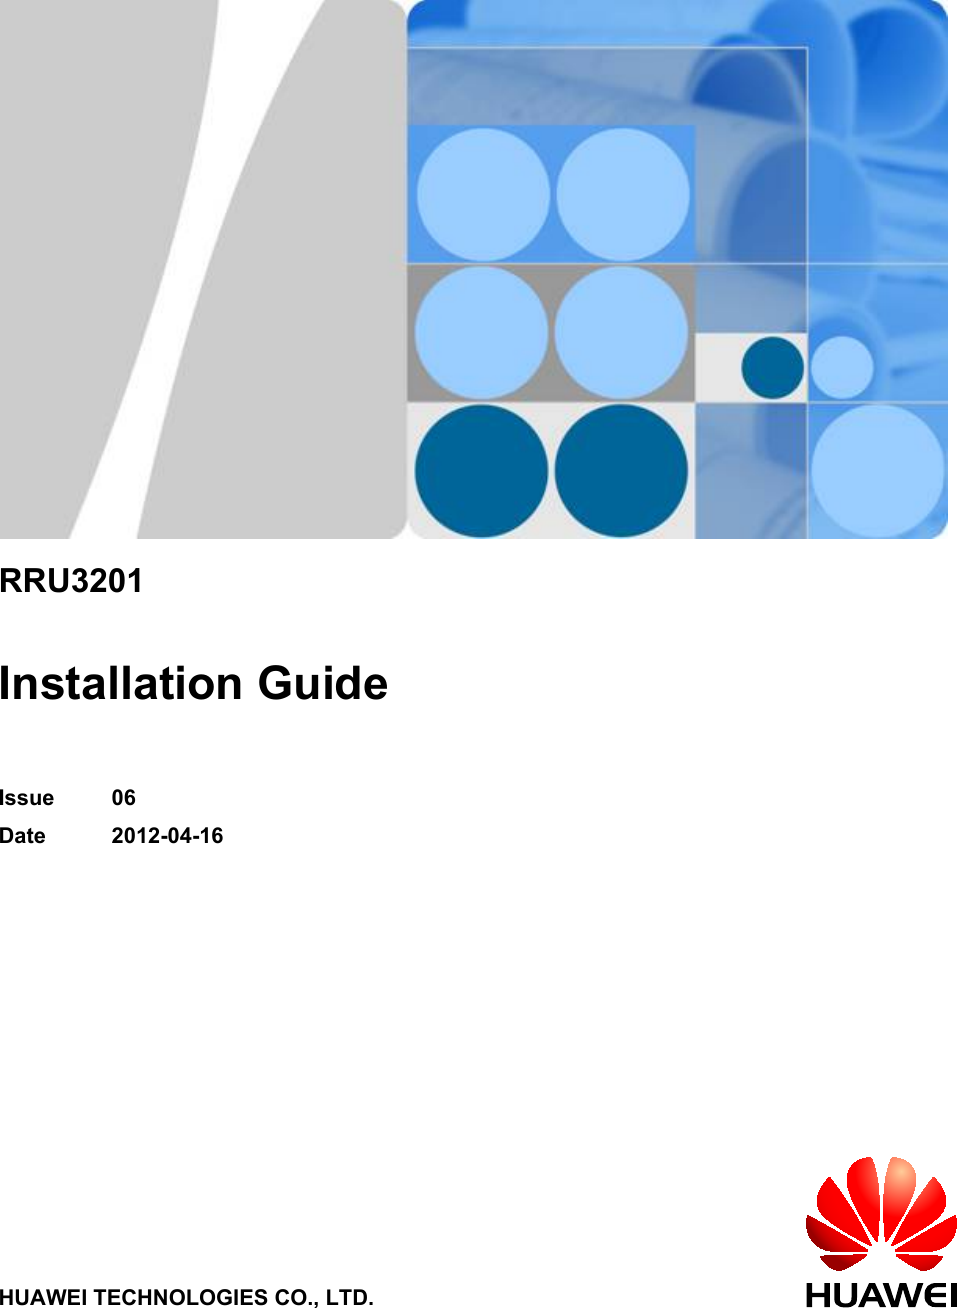 RRU3201Installation GuideIssue 06Date 2012-04-16HUAWEI TECHNOLOGIES CO., LTD.